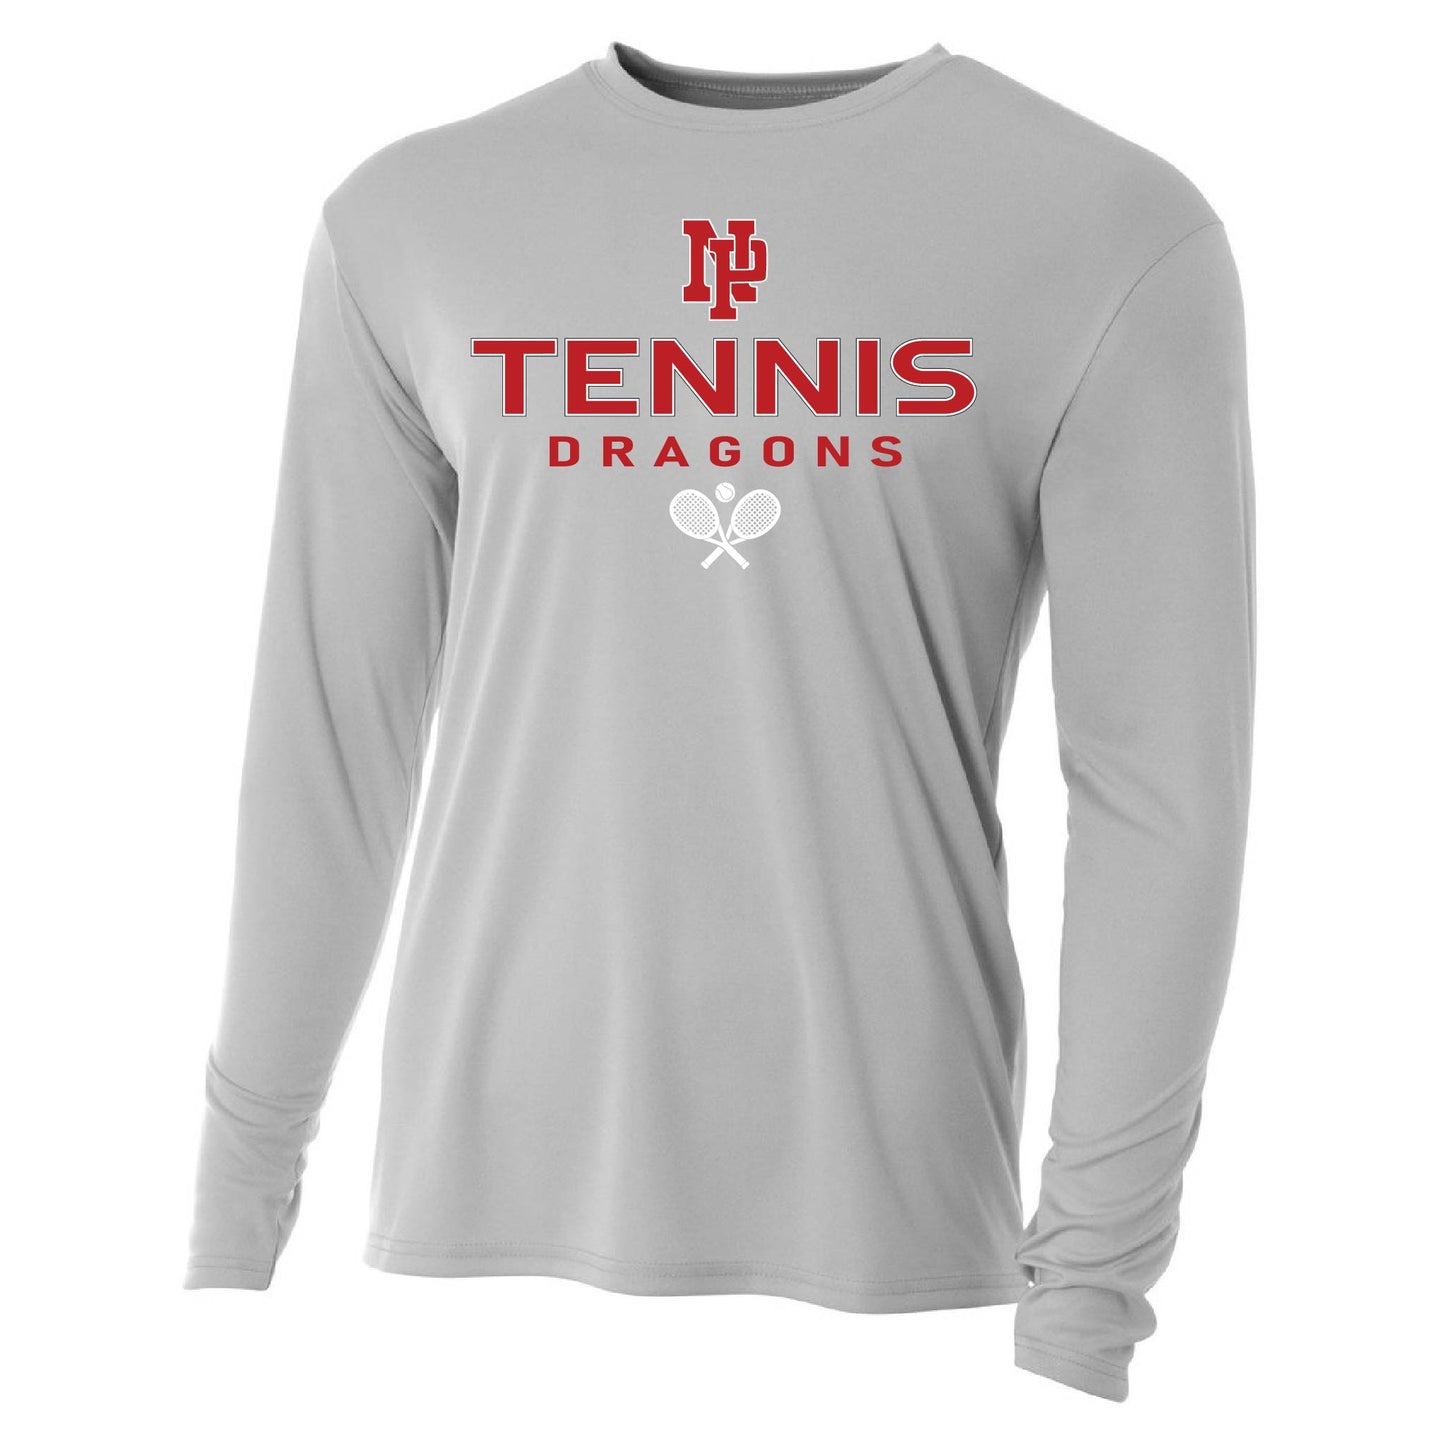 Mens L/S T-Shirt - Dragons Tennis